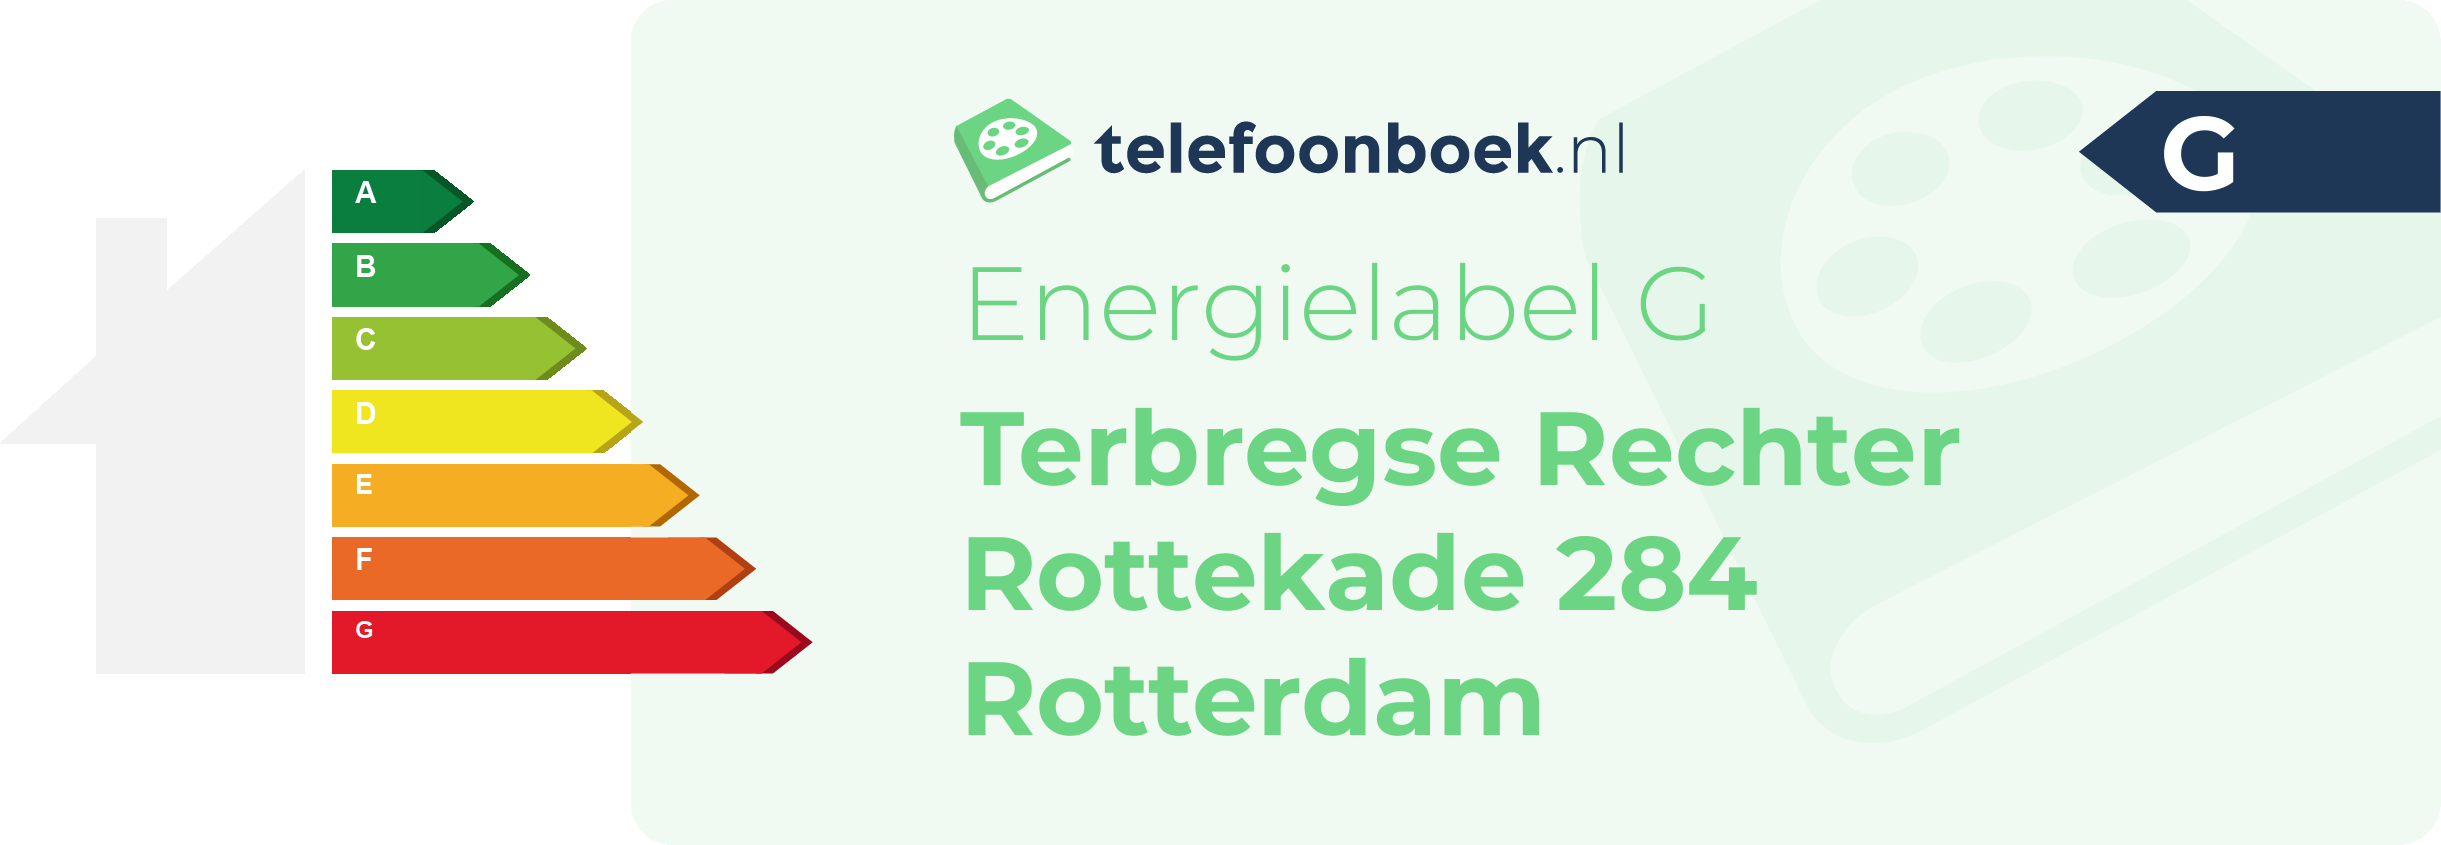 Energielabel Terbregse Rechter Rottekade 284 Rotterdam